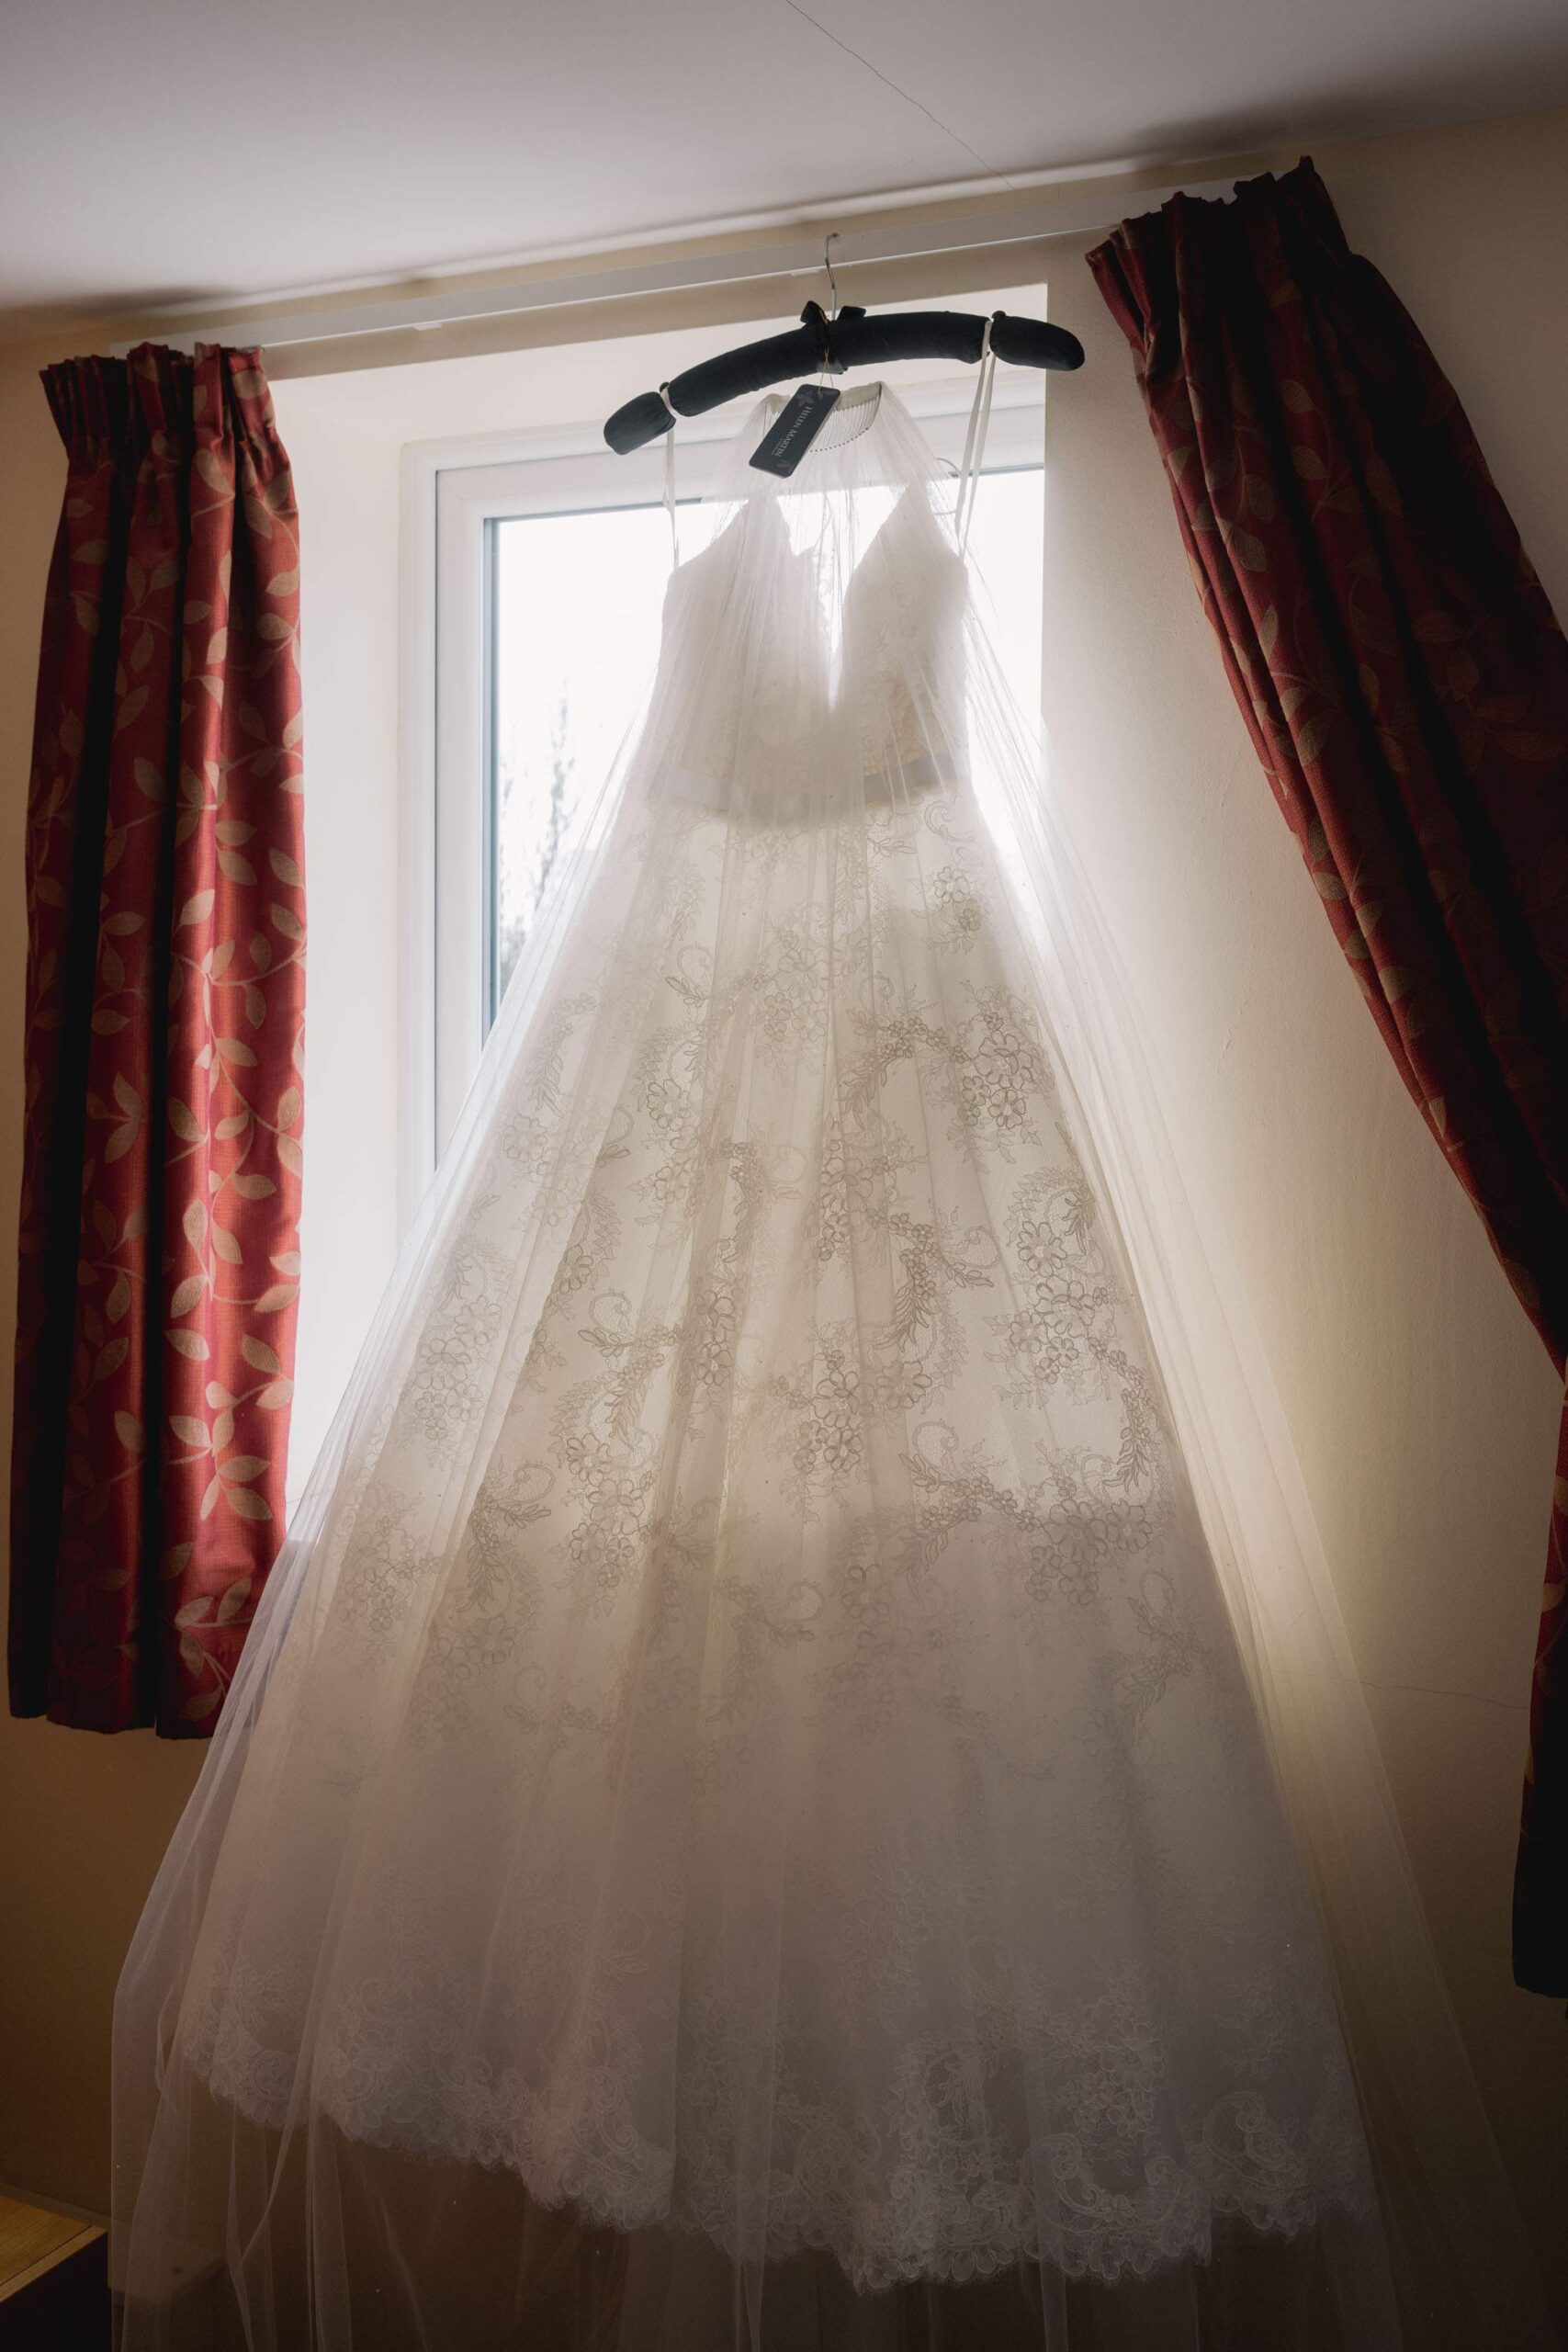 Wedding dress haging in the window.